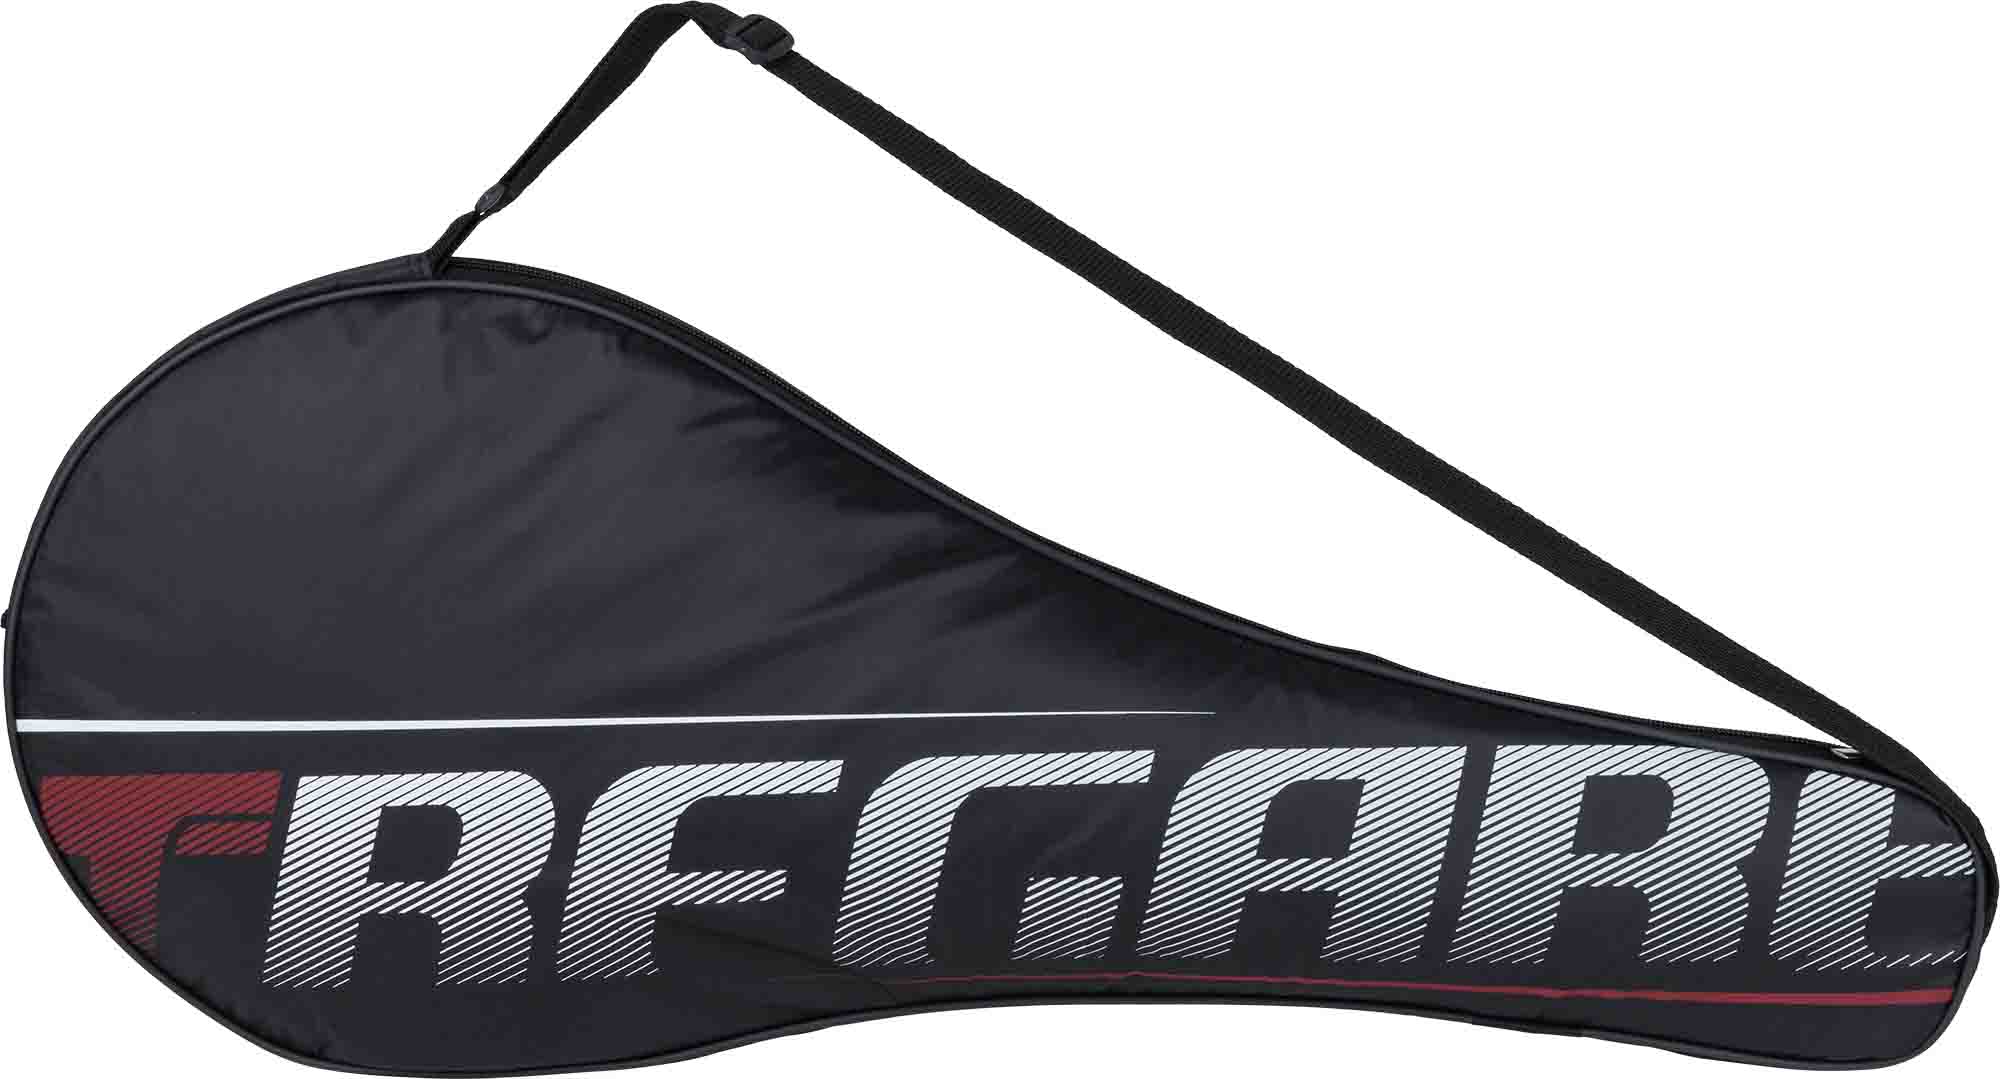 Tennis racquet cover